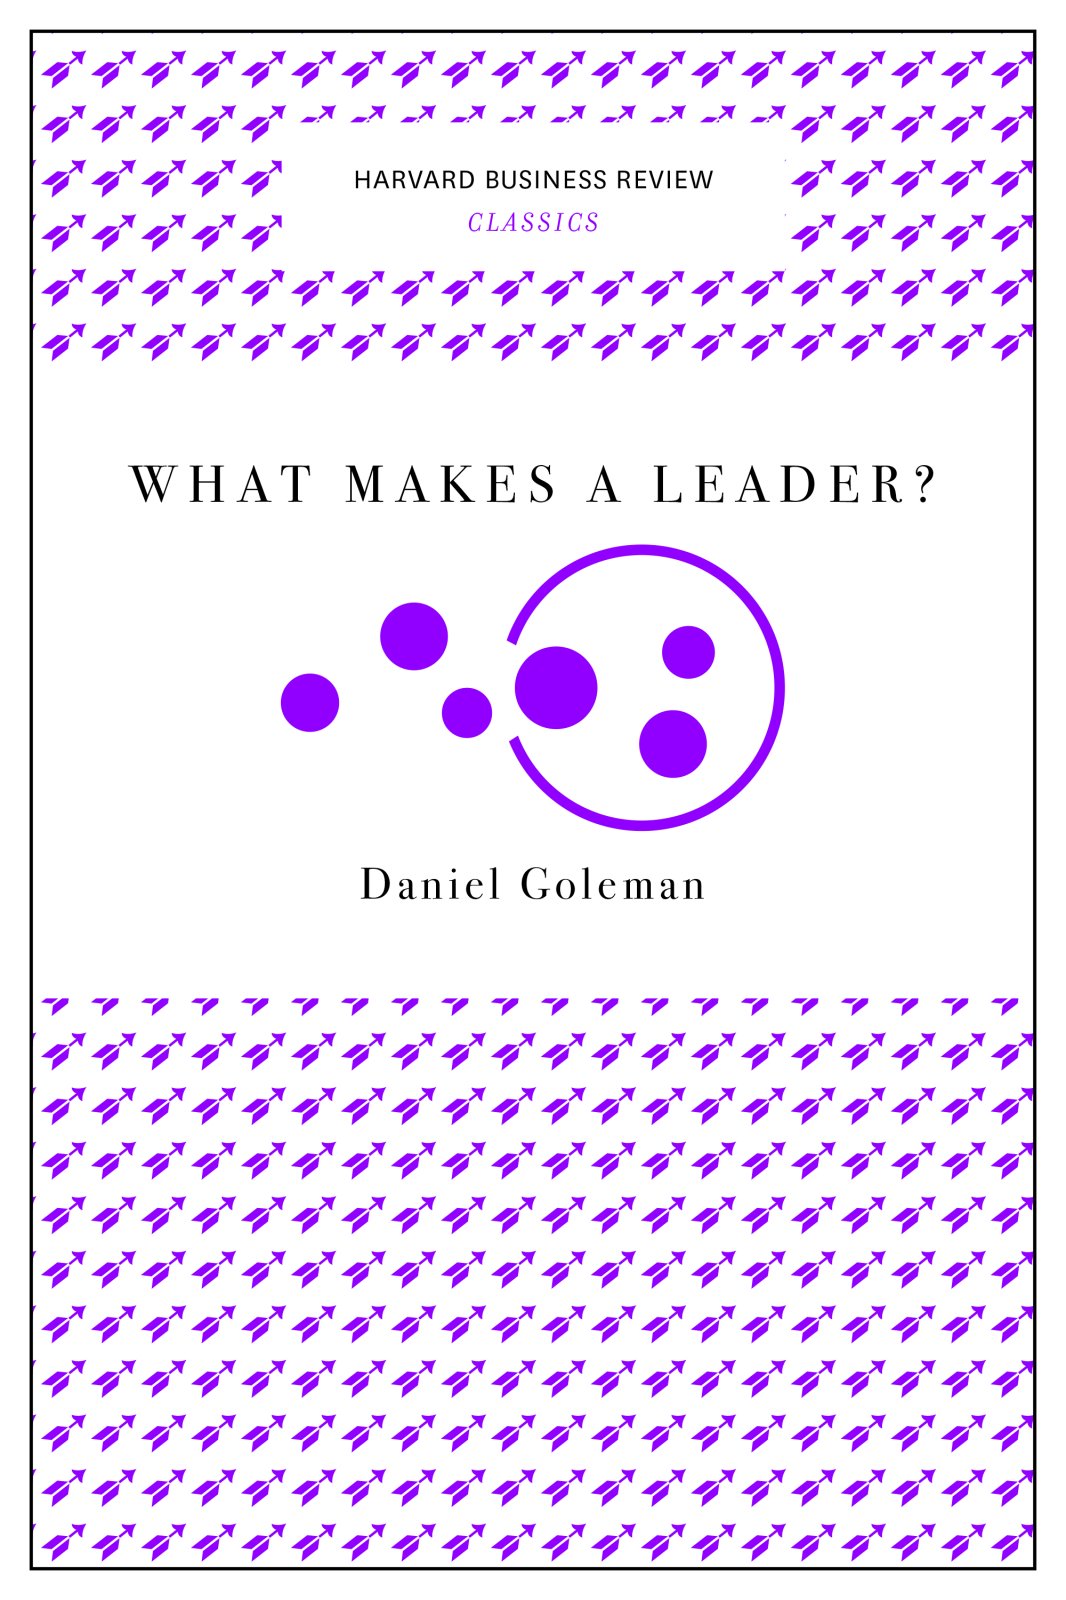 What Makes a Leader? | Daniel Goleman